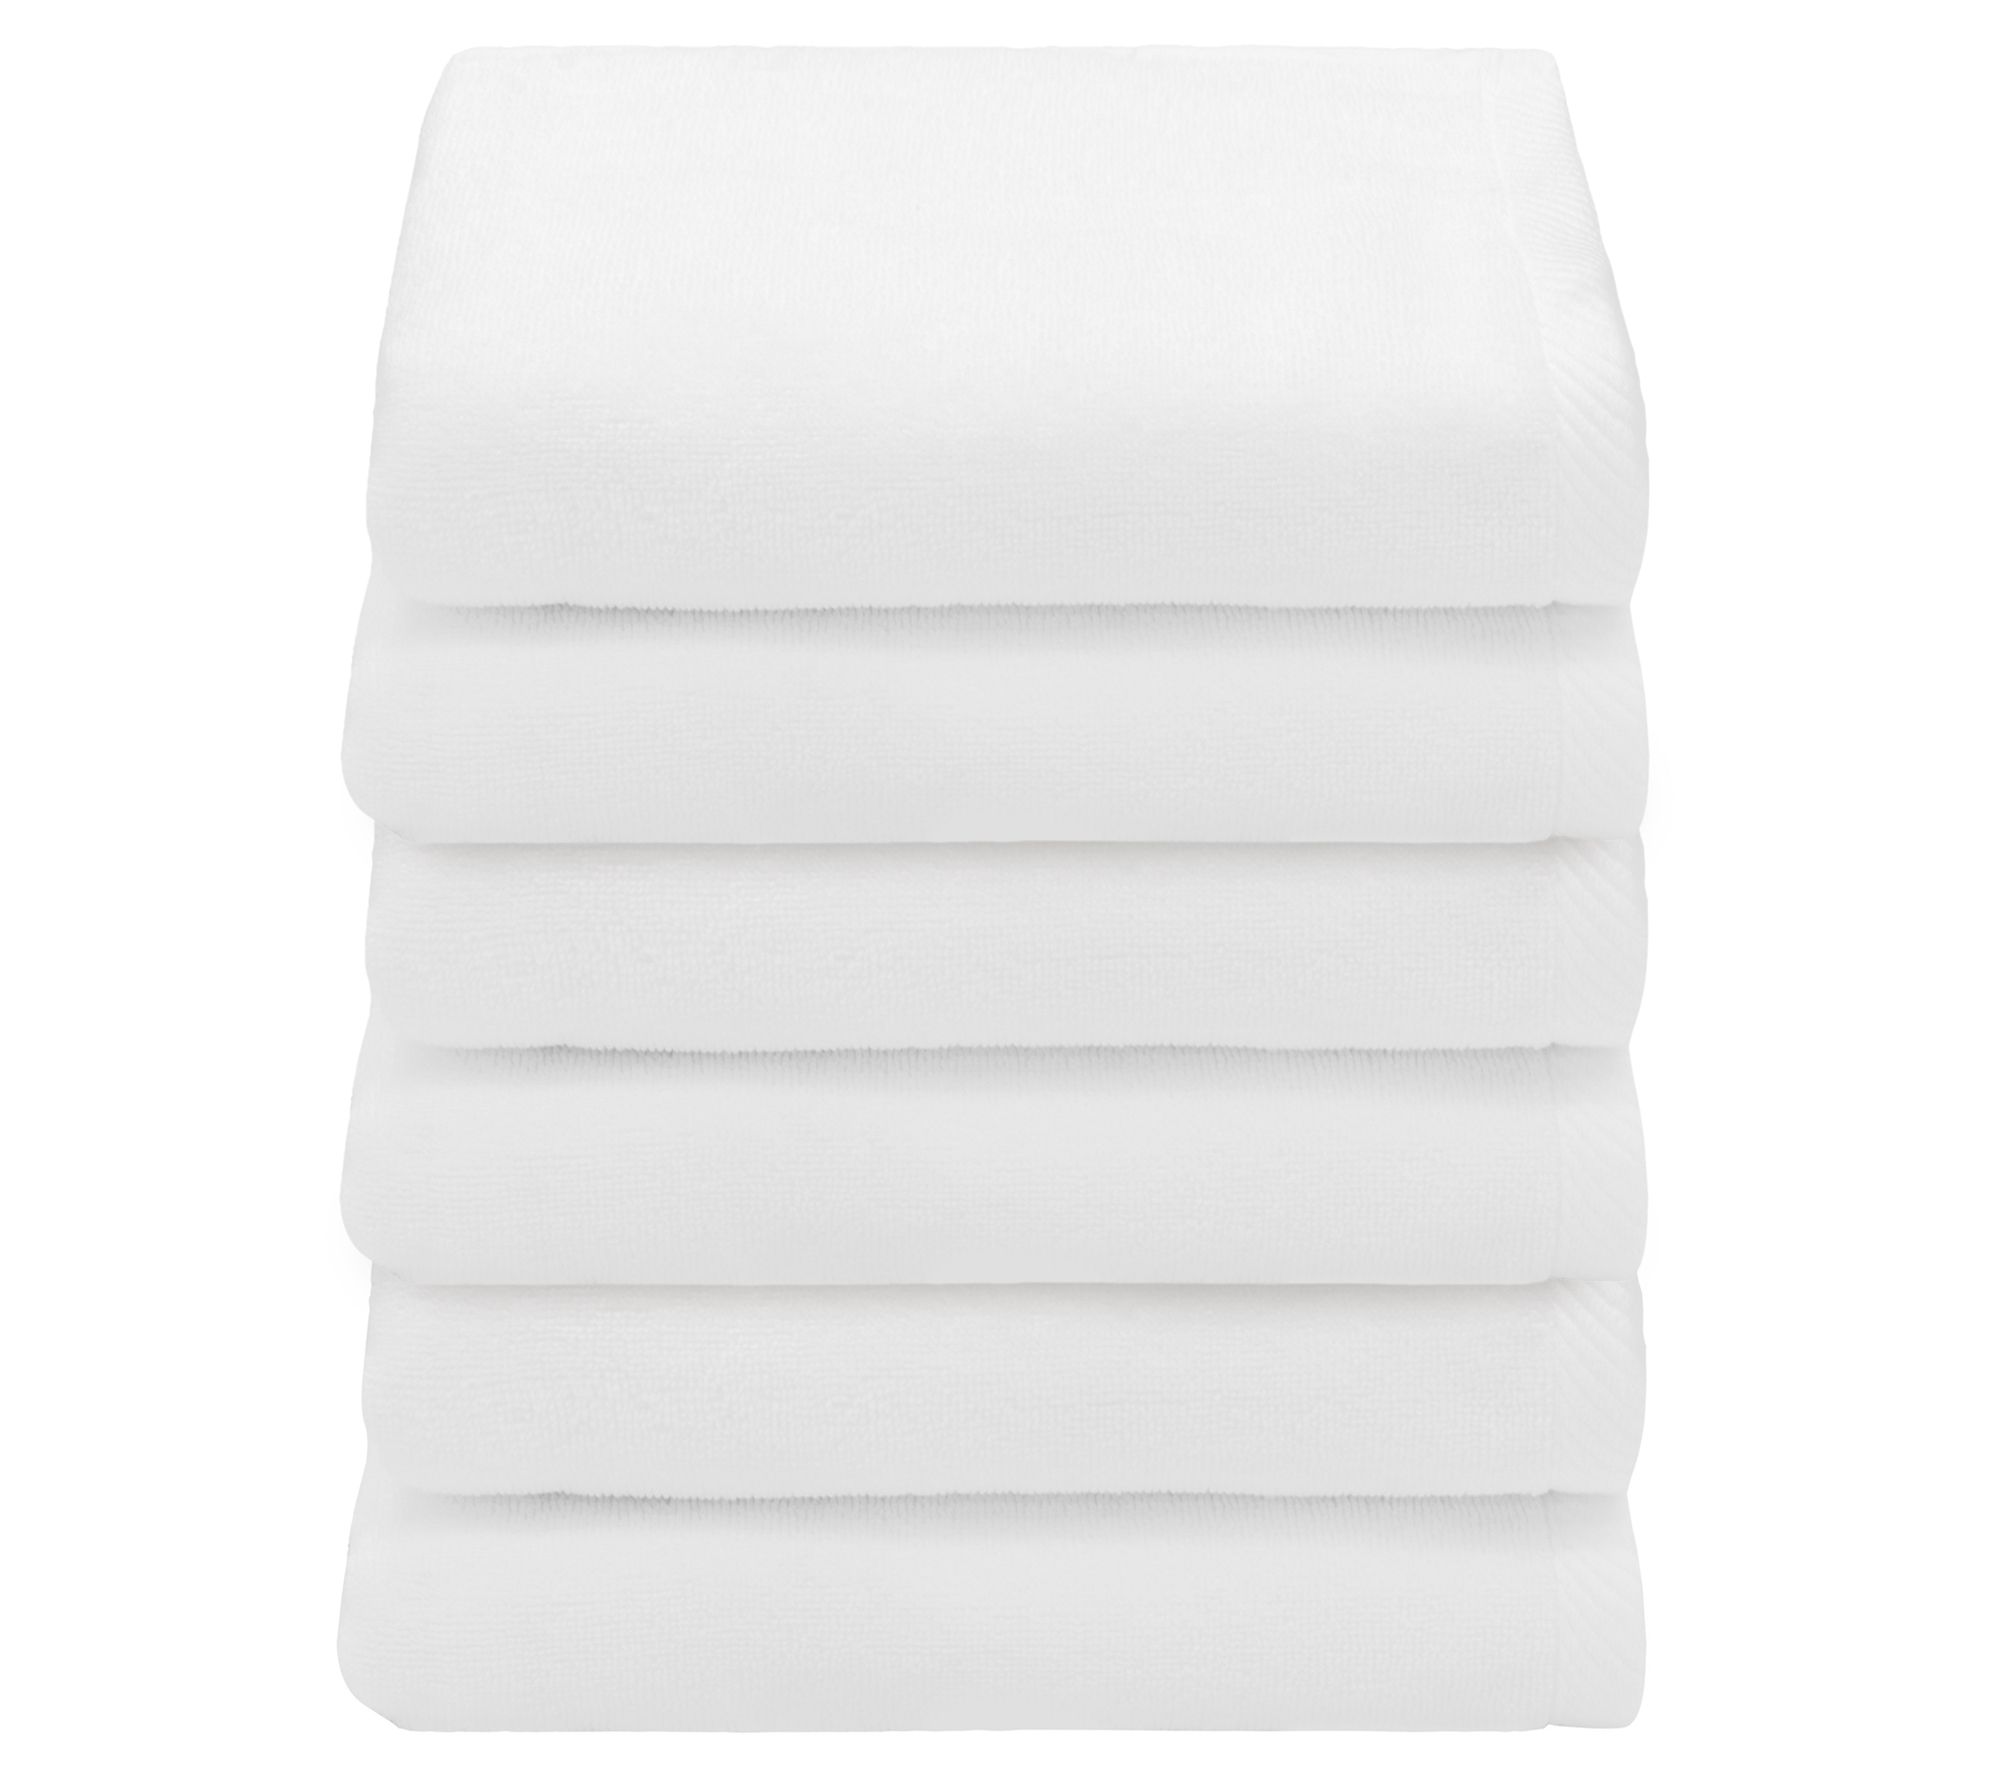 Charisma Heritage American Hand Towel Set - Soft Rose - 4 Pack